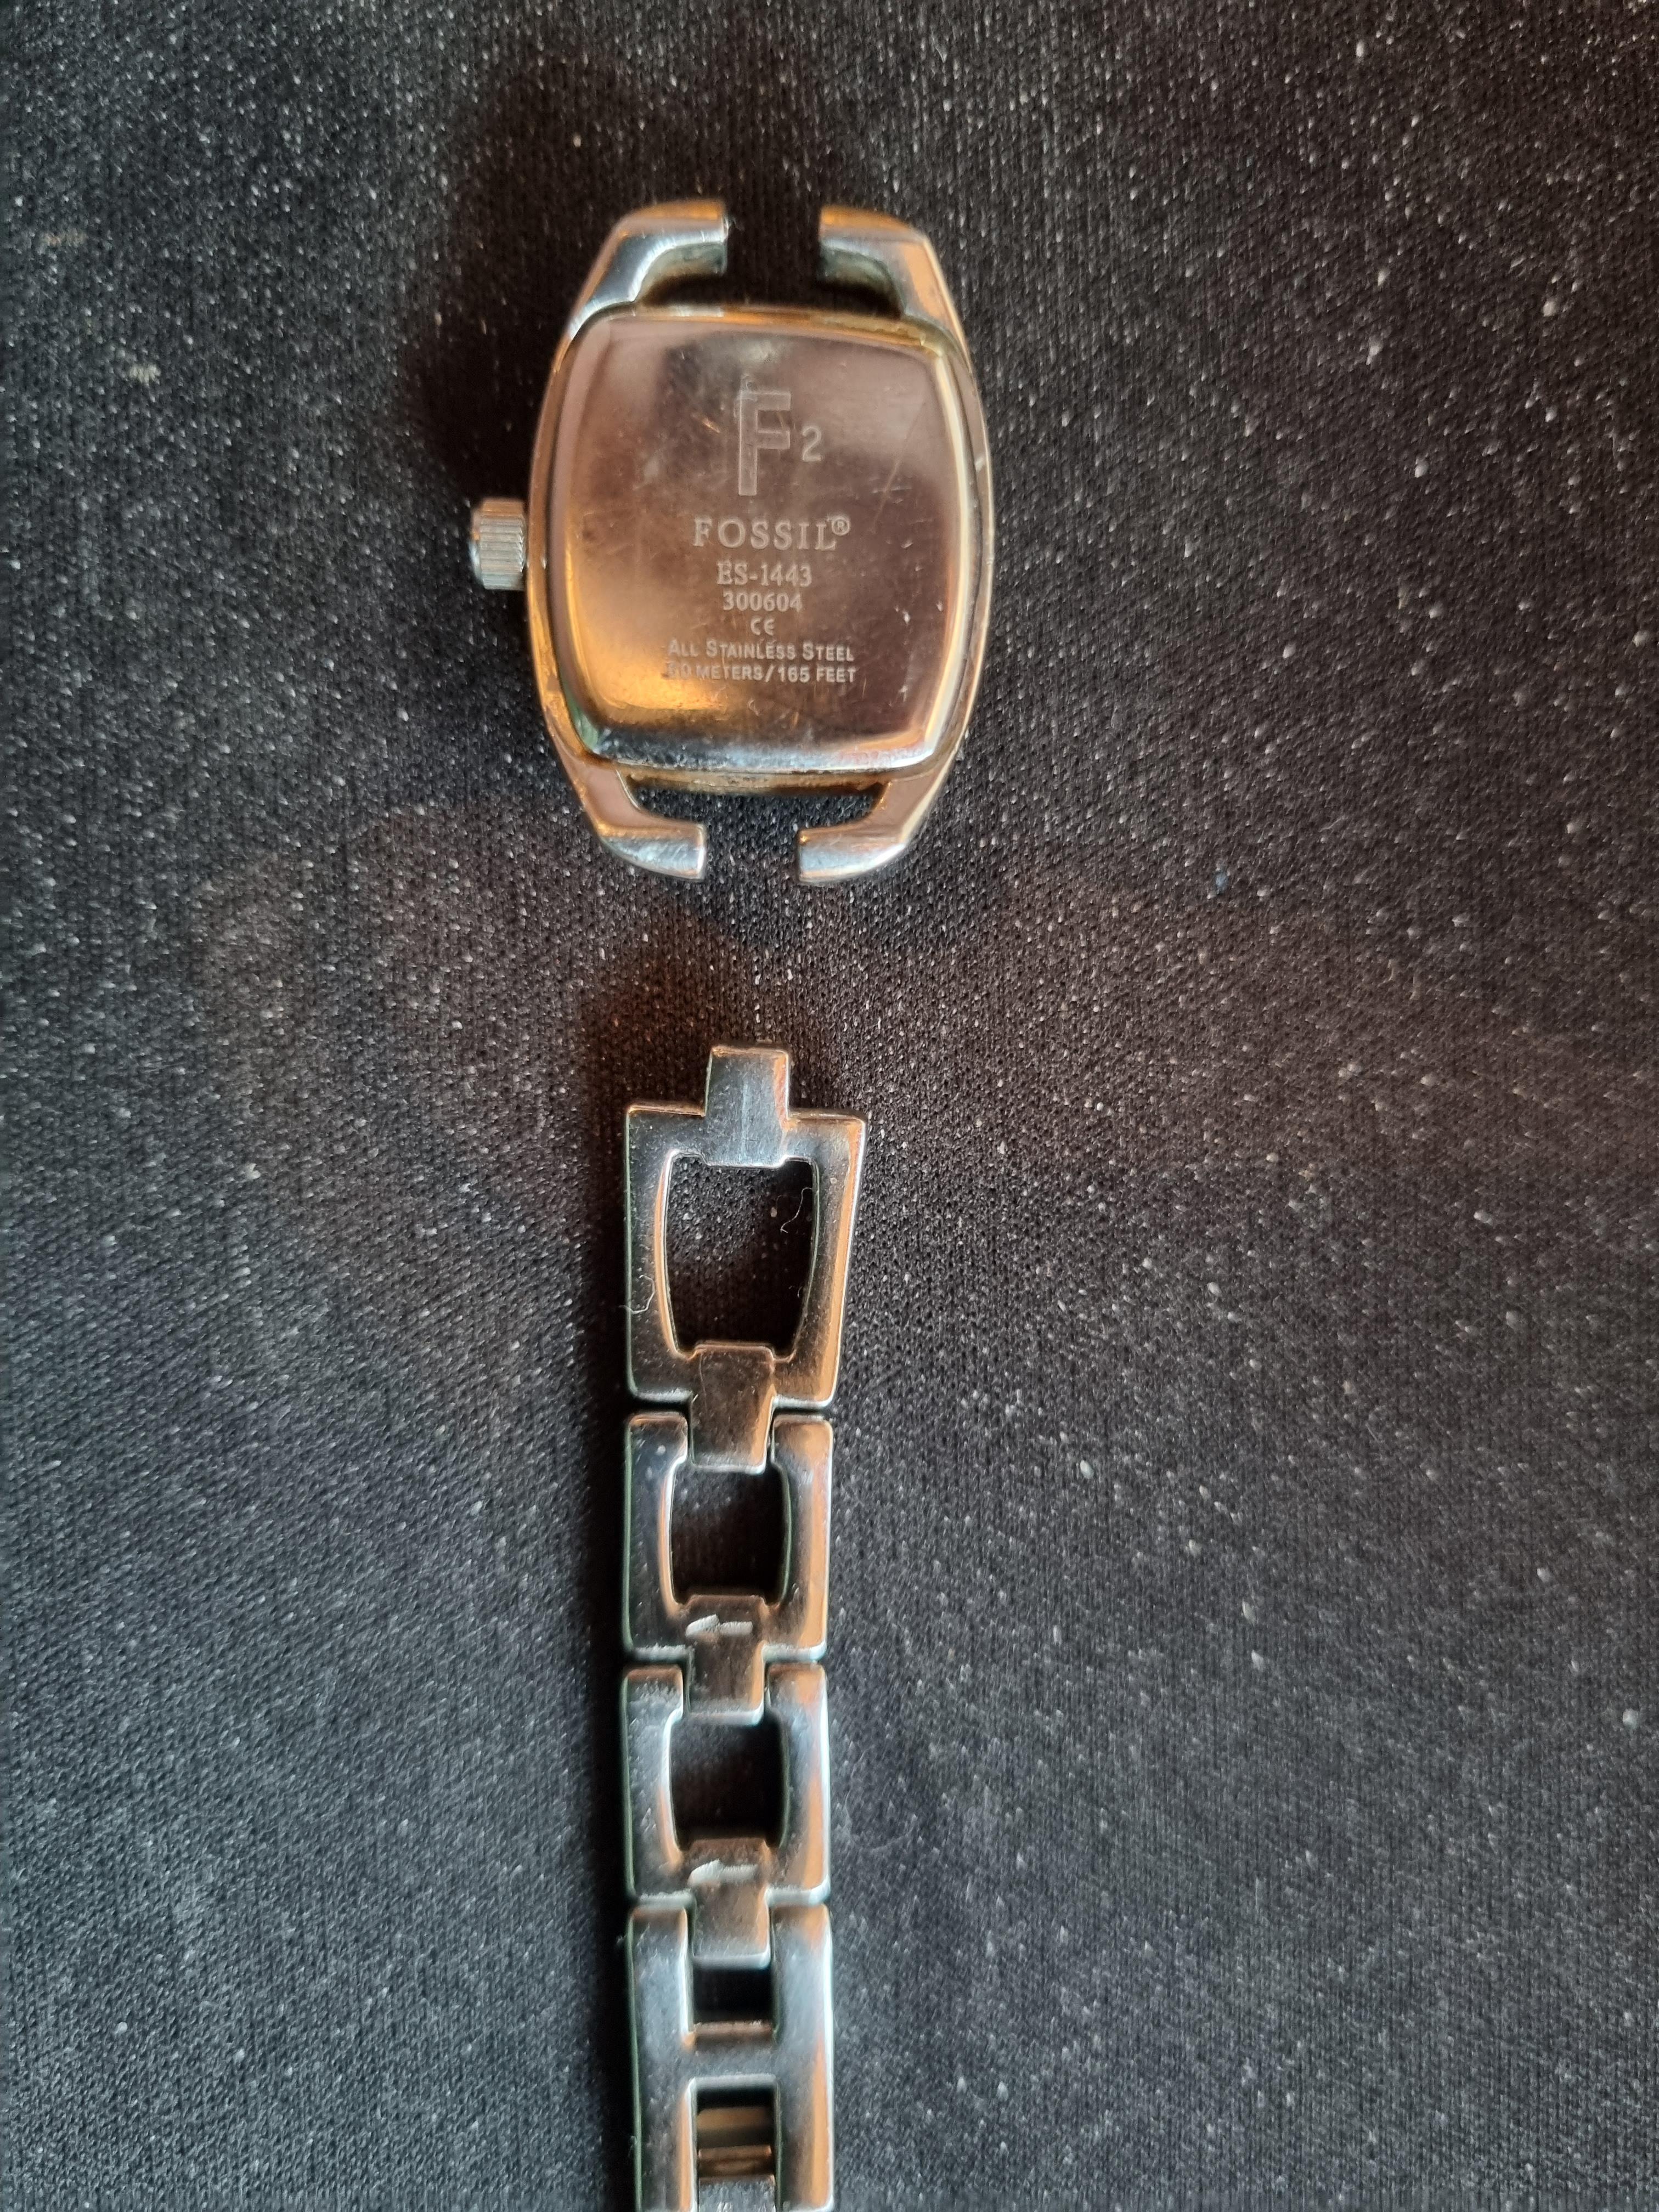 Watch pin identification - Watch Repairs Help & Advice - Watch Repair Talk